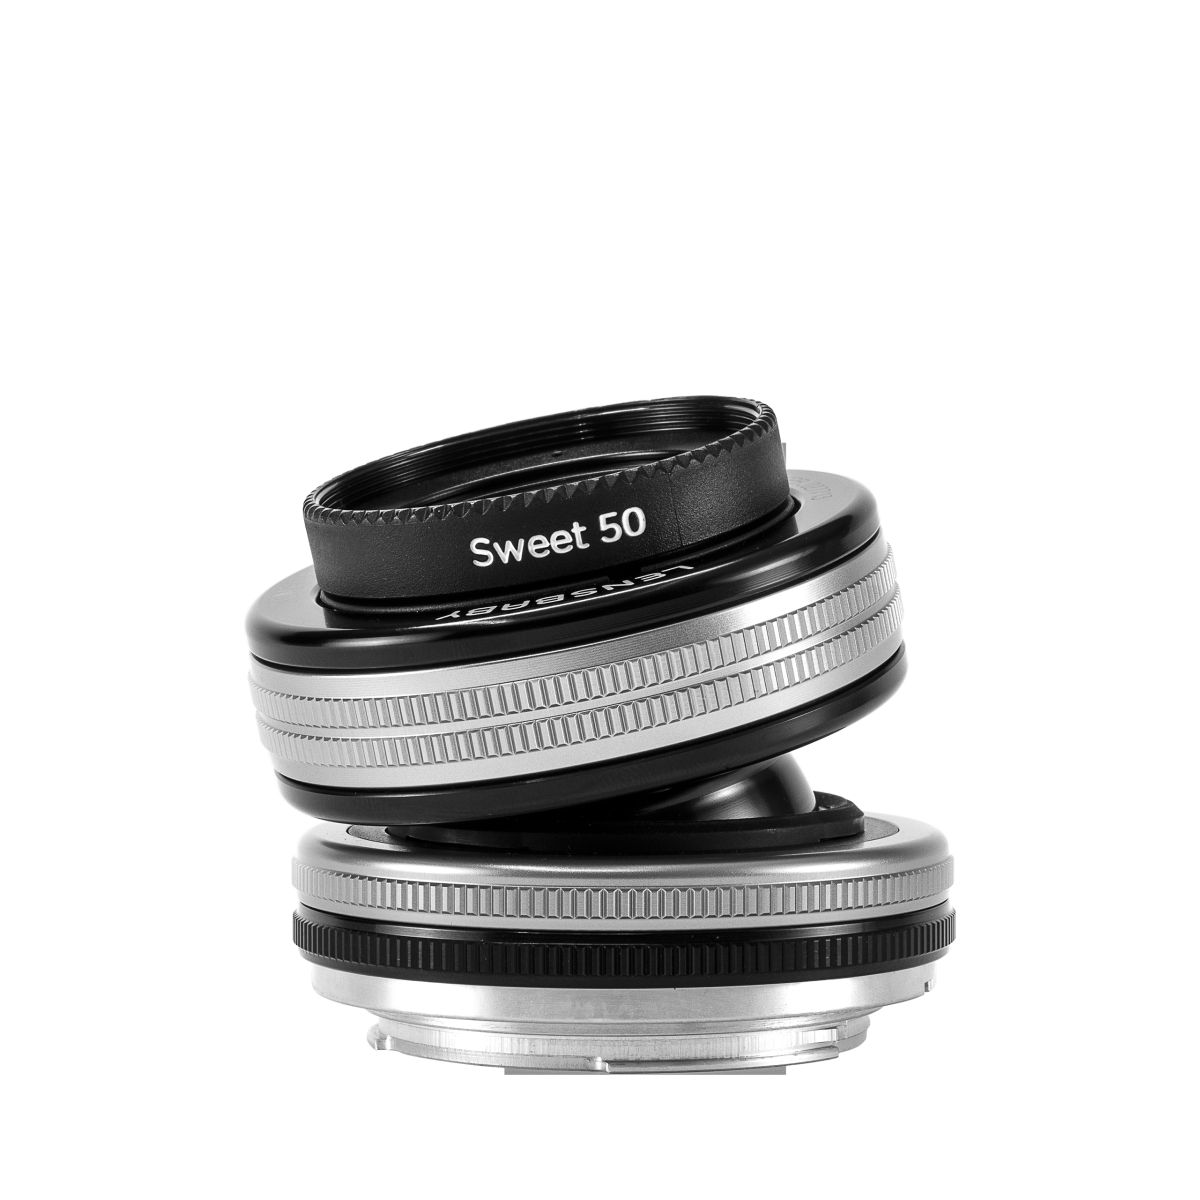 Lensbaby Soft Focus Optic Swap Macro Kit Sony E